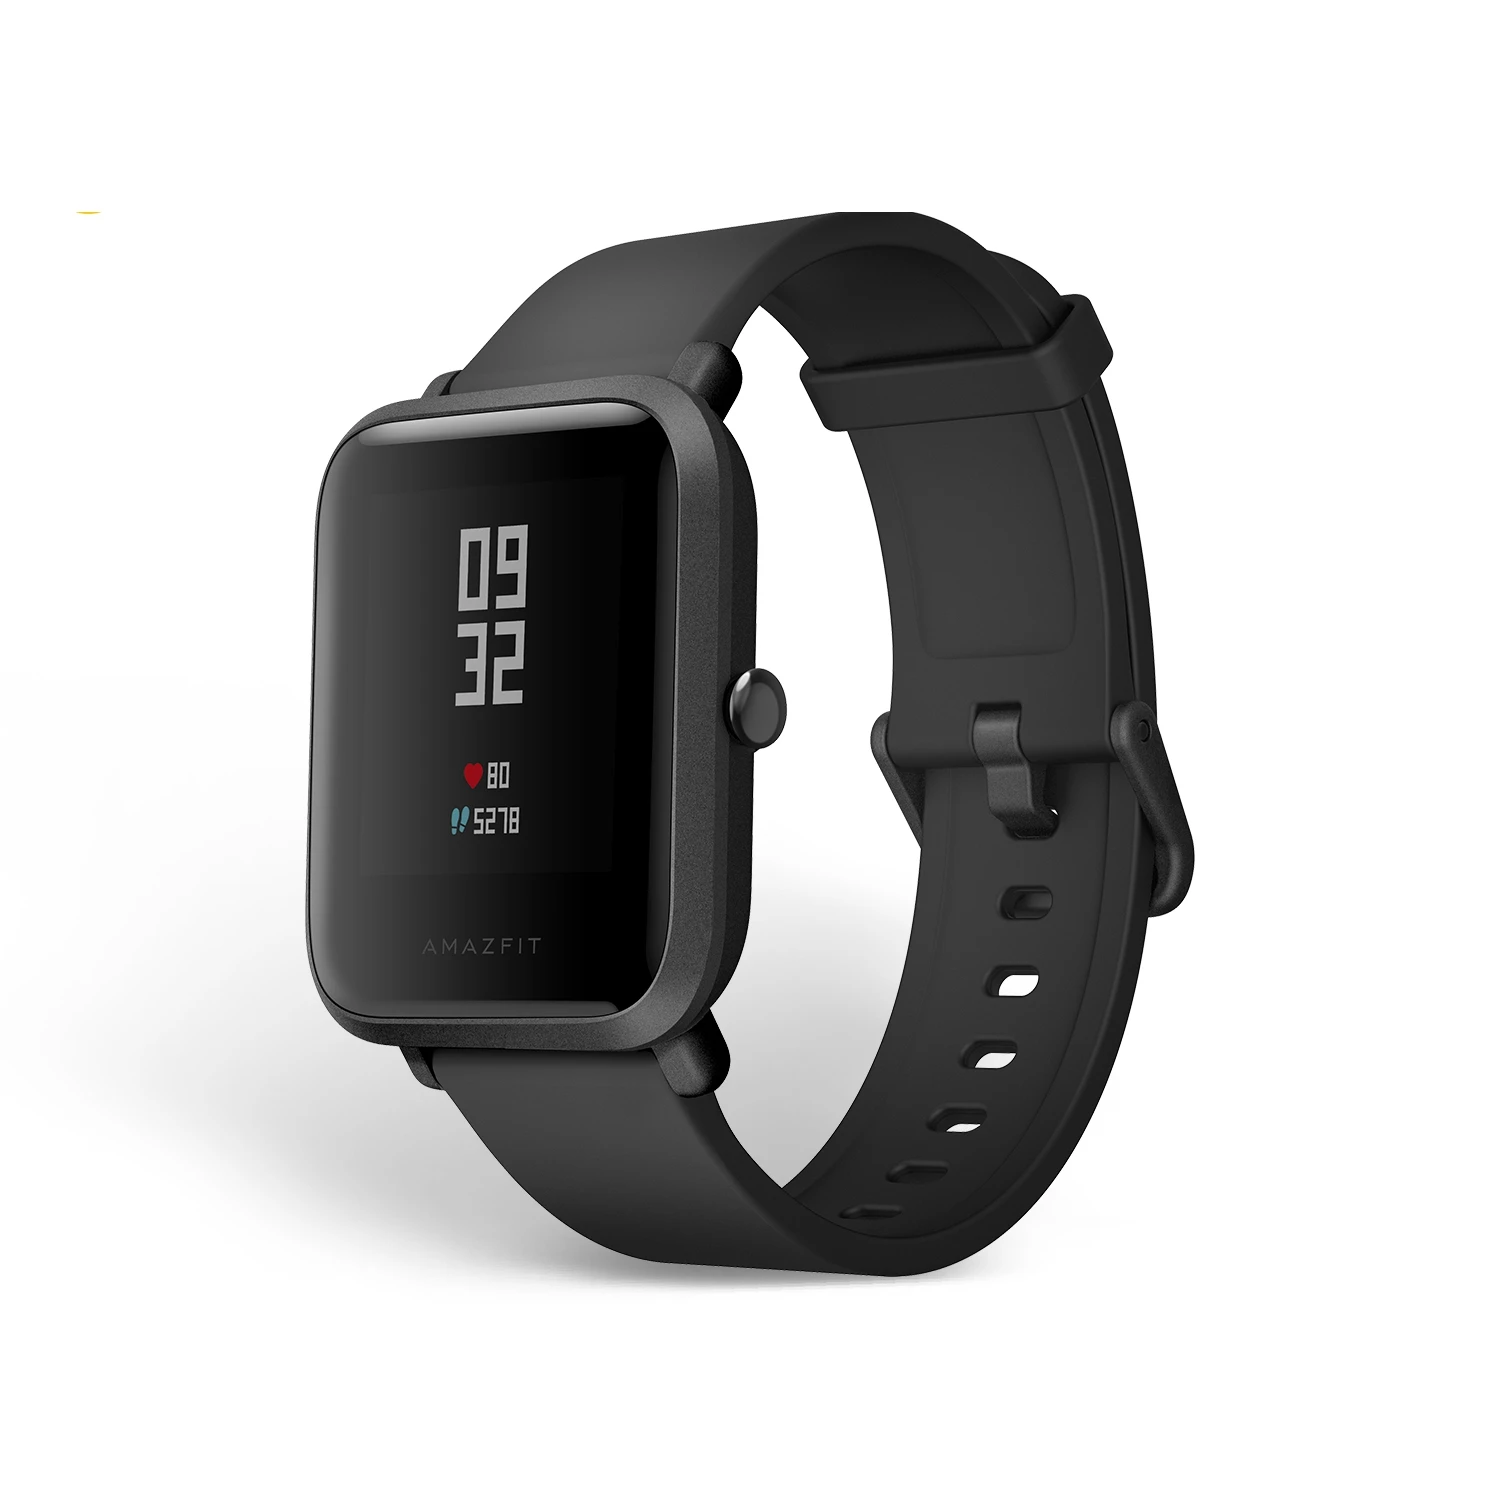 

Original Amazfit Bip S Global Version Smartwatch 5ATM GPS GLONASS Bluetooth Smart Watch for Android IOS Phone